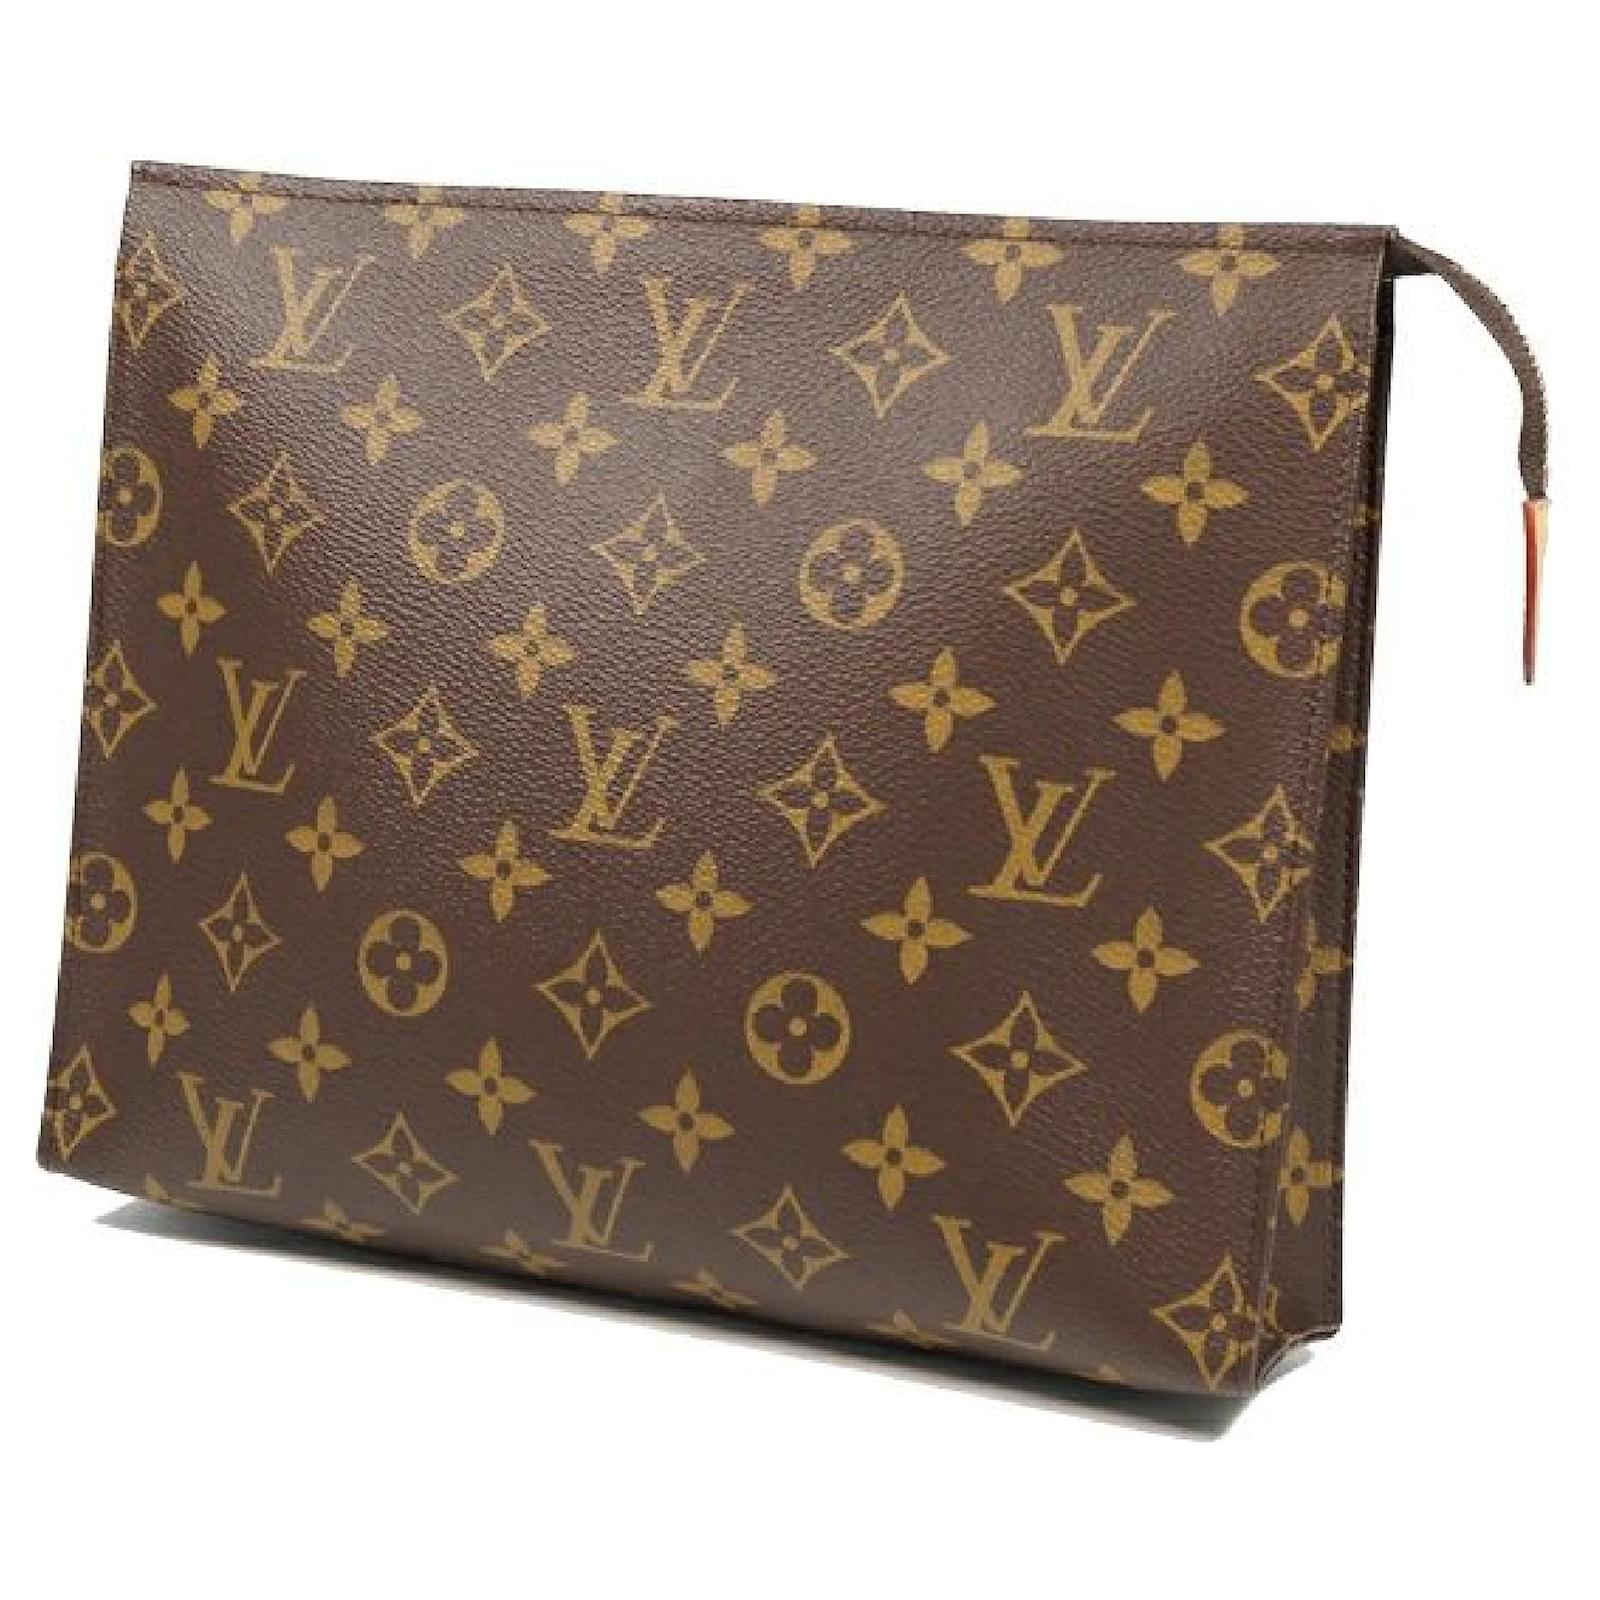 Louis Vuitton Toiletry Pouch 26 Monogram Bag Handbag M47542